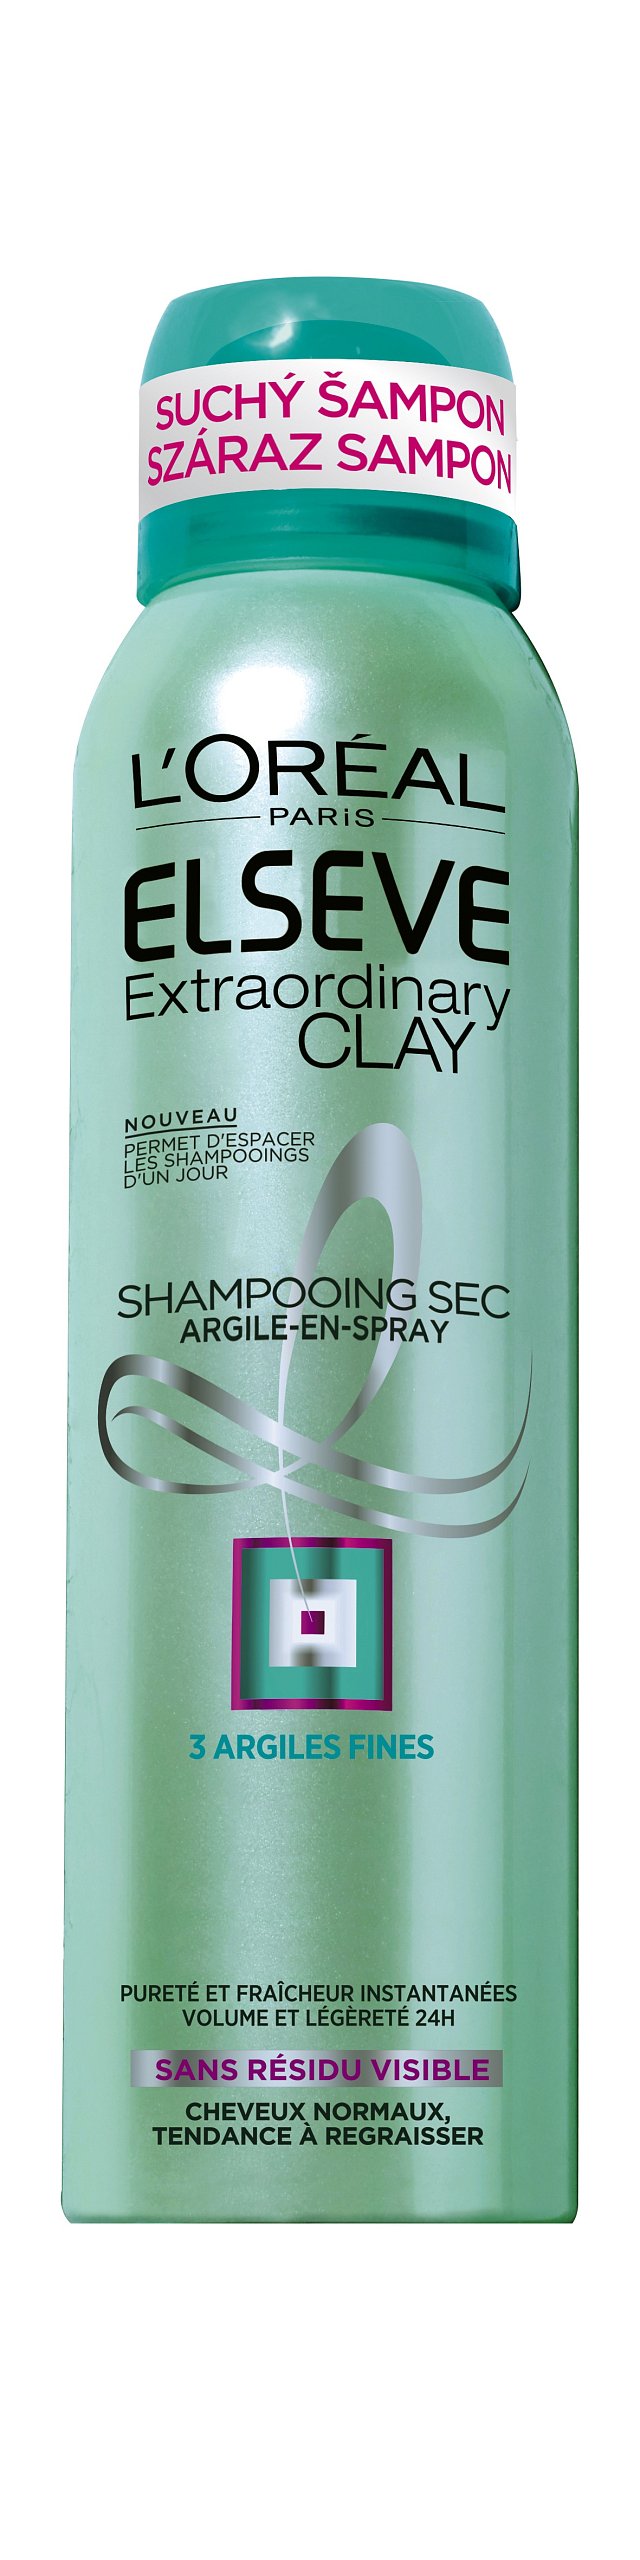 Suchý šampon Elseve Extraordinary Clay, L’Oréal Paris, cena 149, 90 Kč.